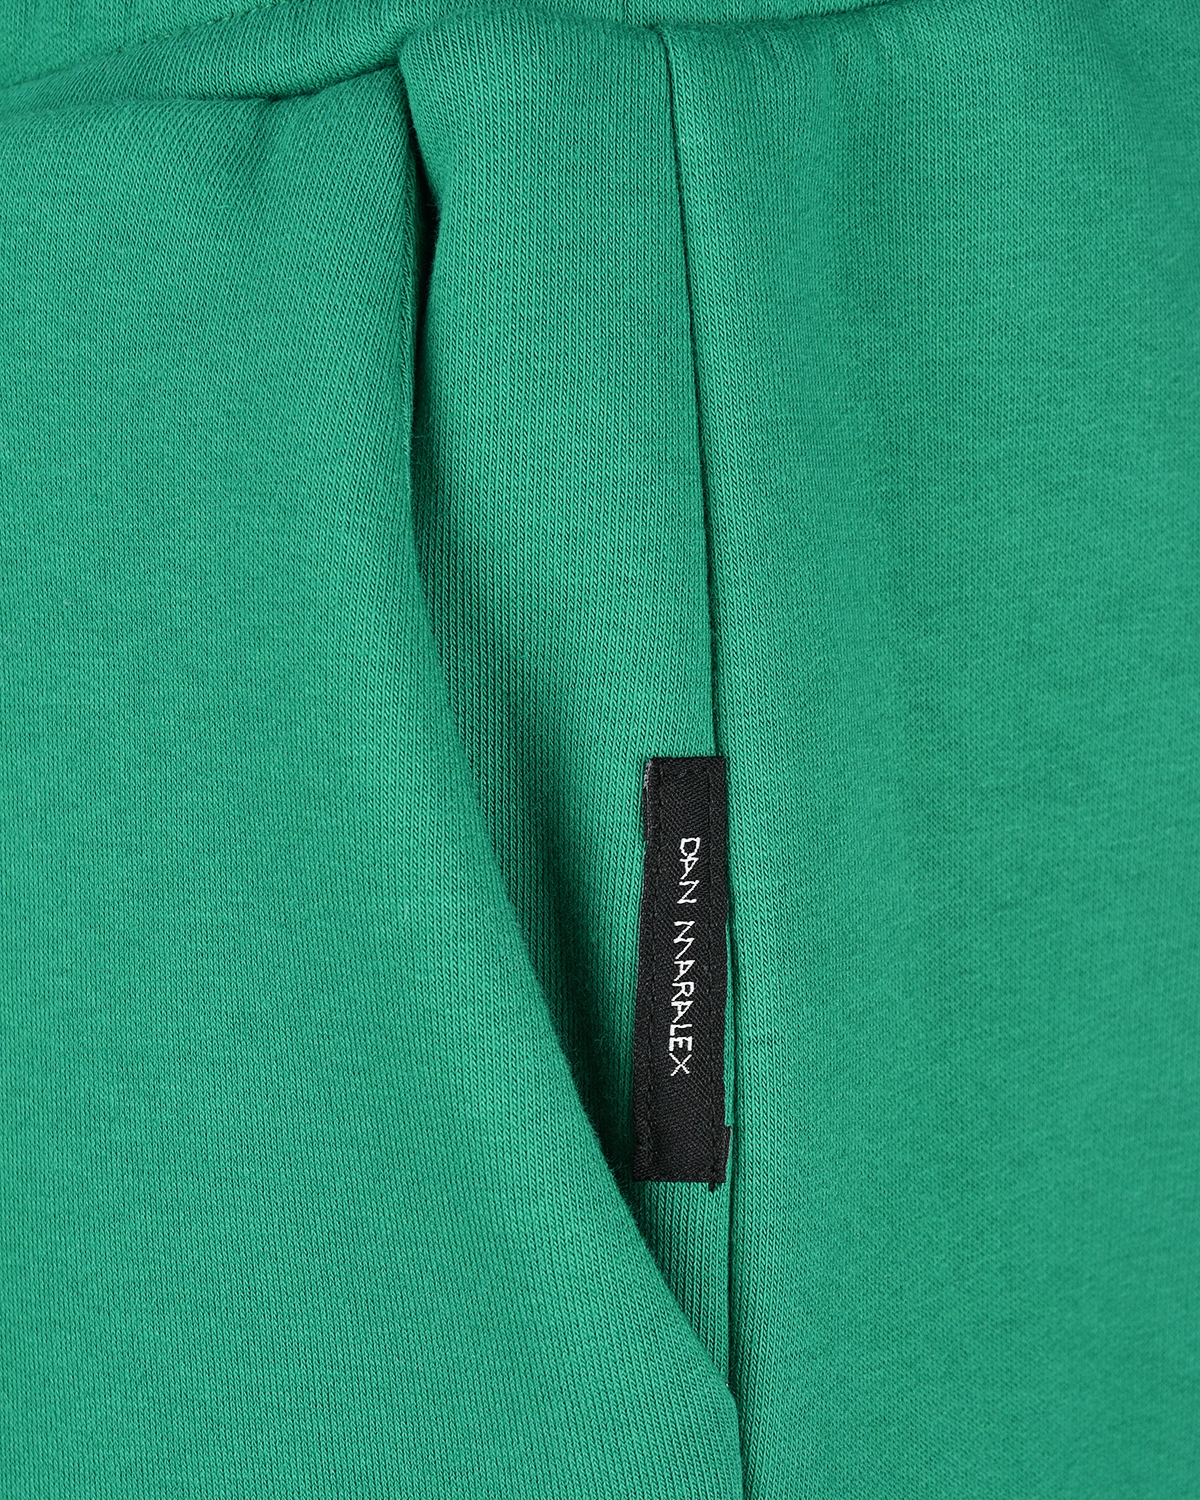 Зеленые джоггеры Dan Maralex, размер 42/176, цвет зеленый - фото 7